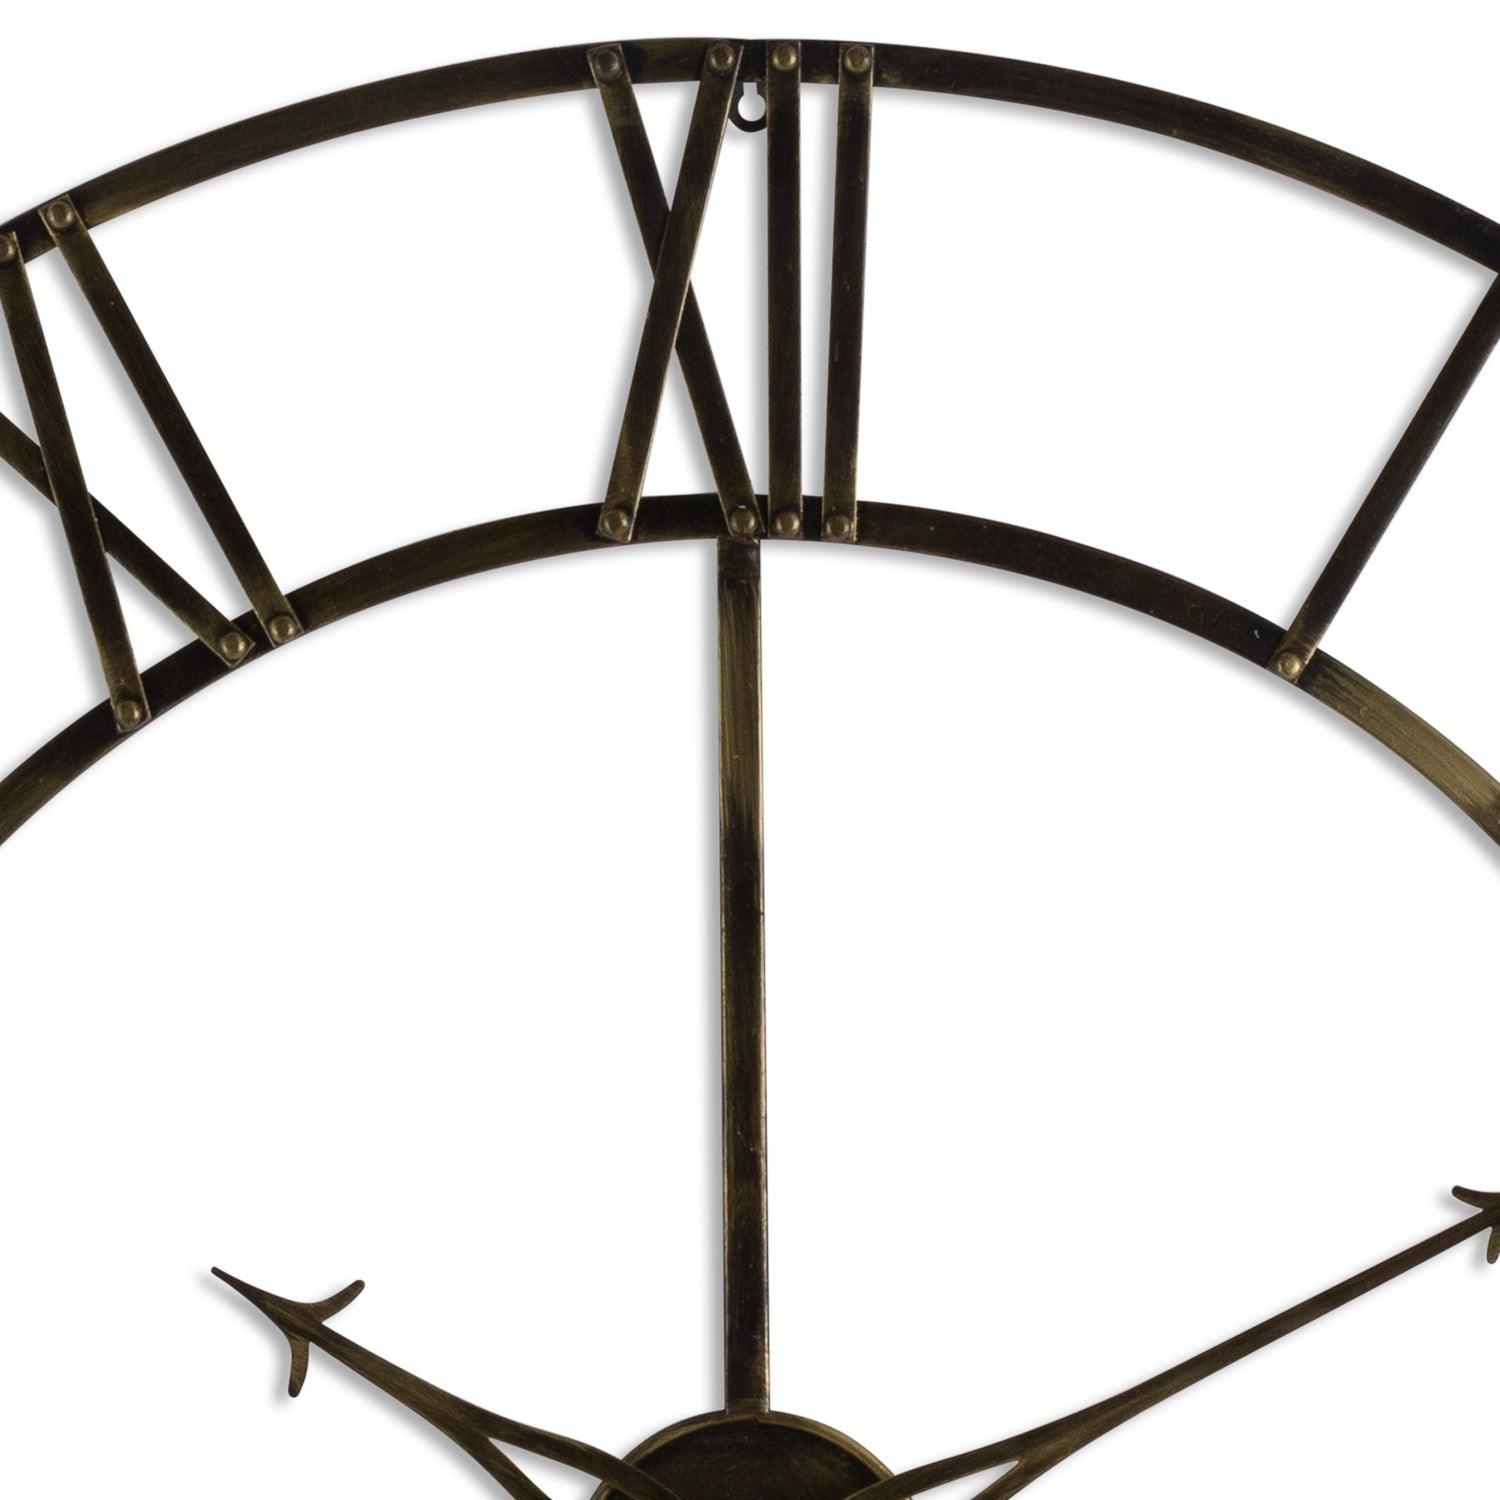 Large Antique Brass Large Skeleton Clock-Wall Clocks